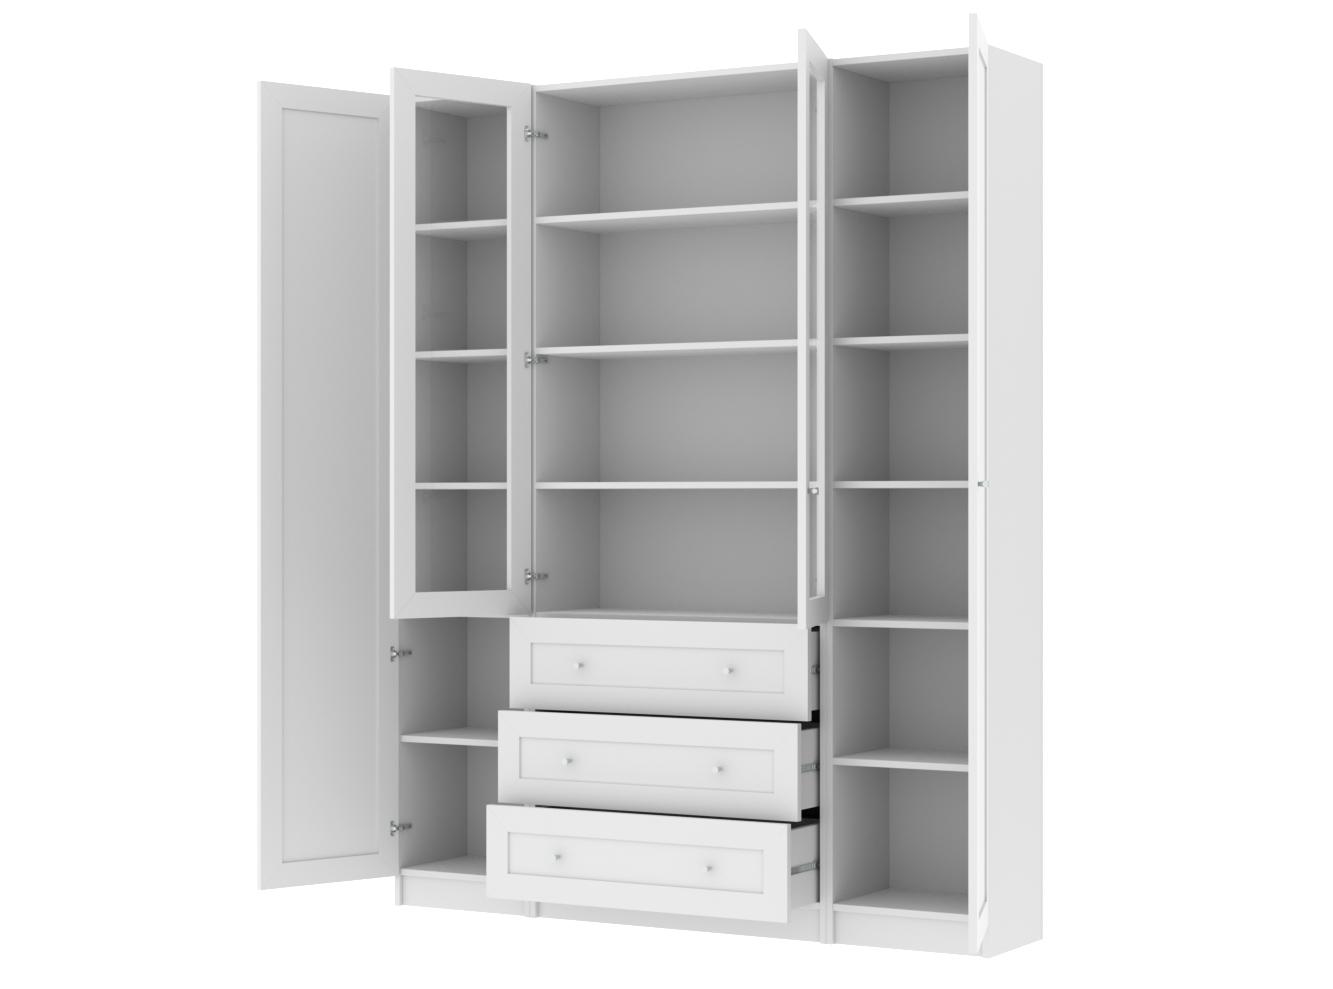  Книжный шкаф Билли 361 white ИКЕА (IKEA) изображение товара